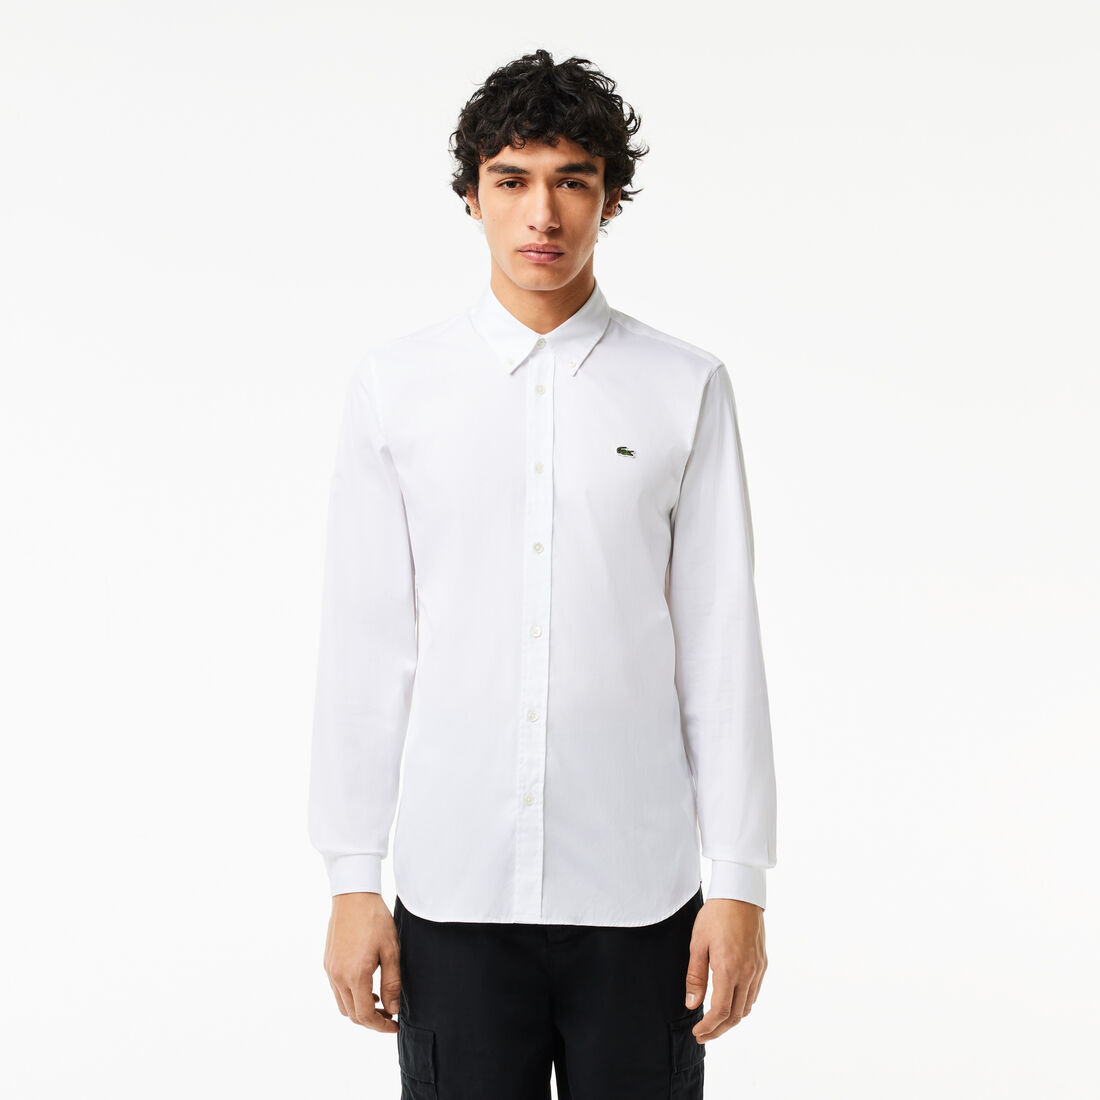 Men’s Slim Fit Premium Cotton Shirt